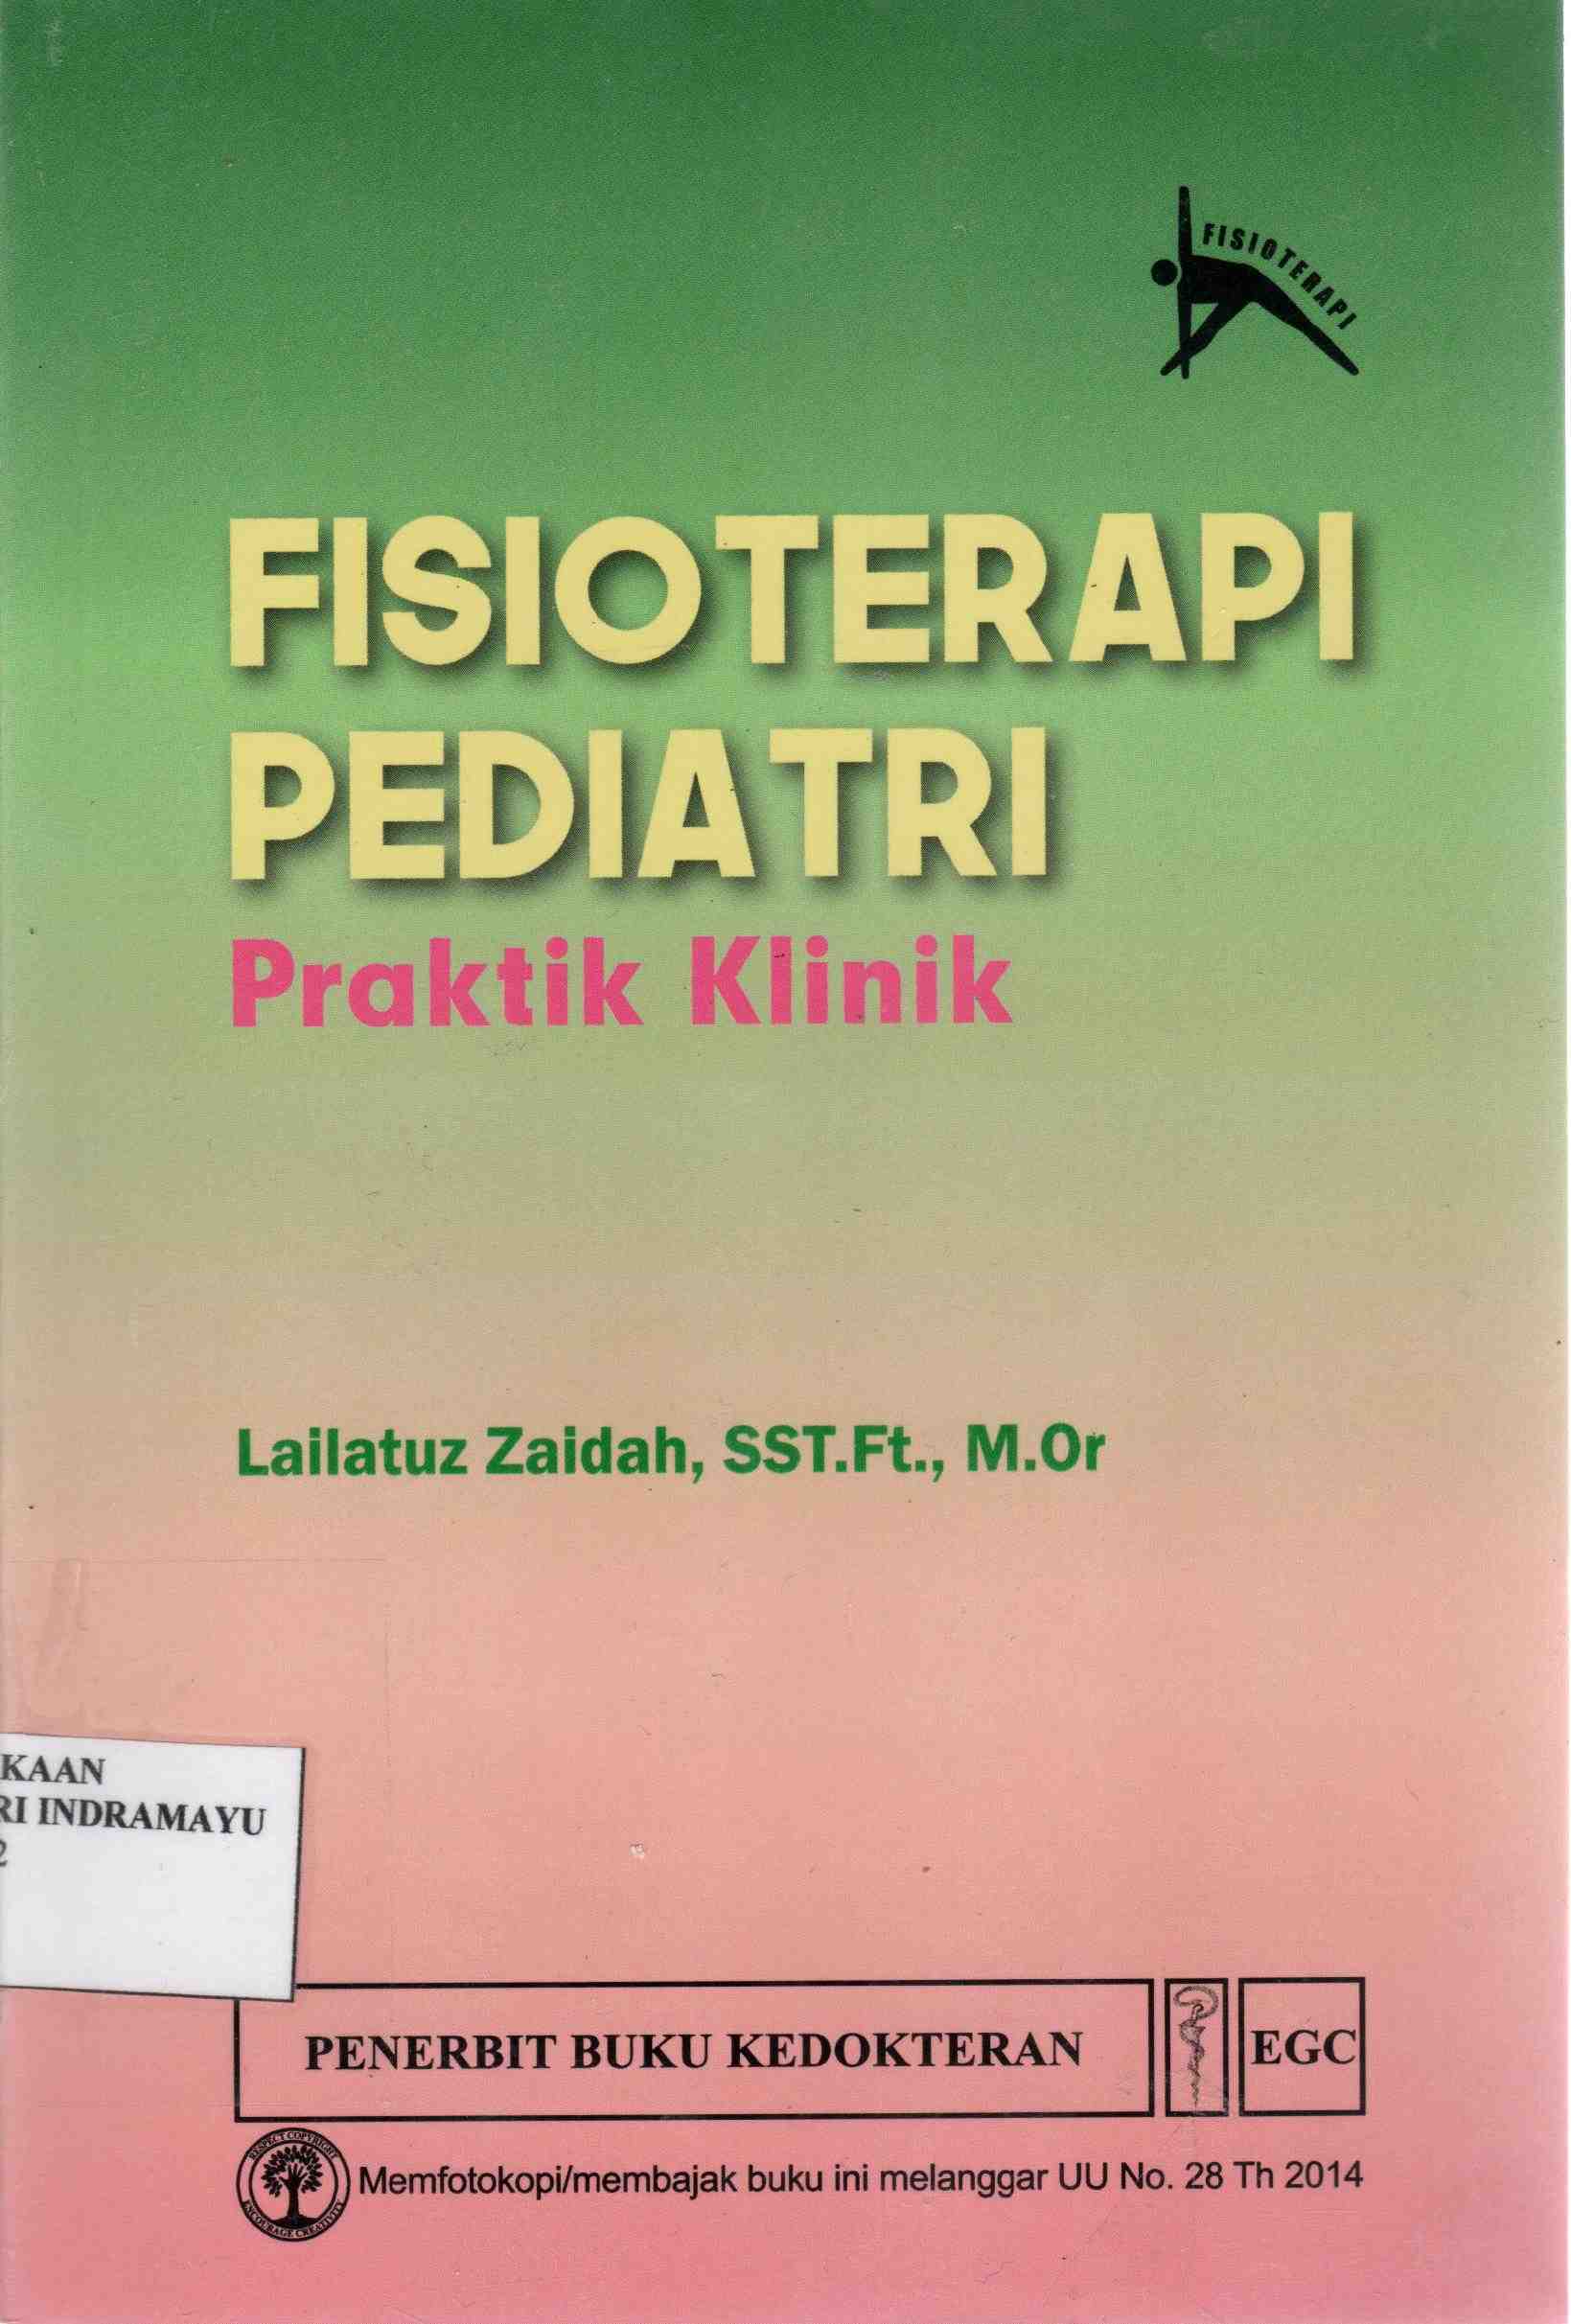 Image of Fisioterapi Pediatri : Praktik Klinik